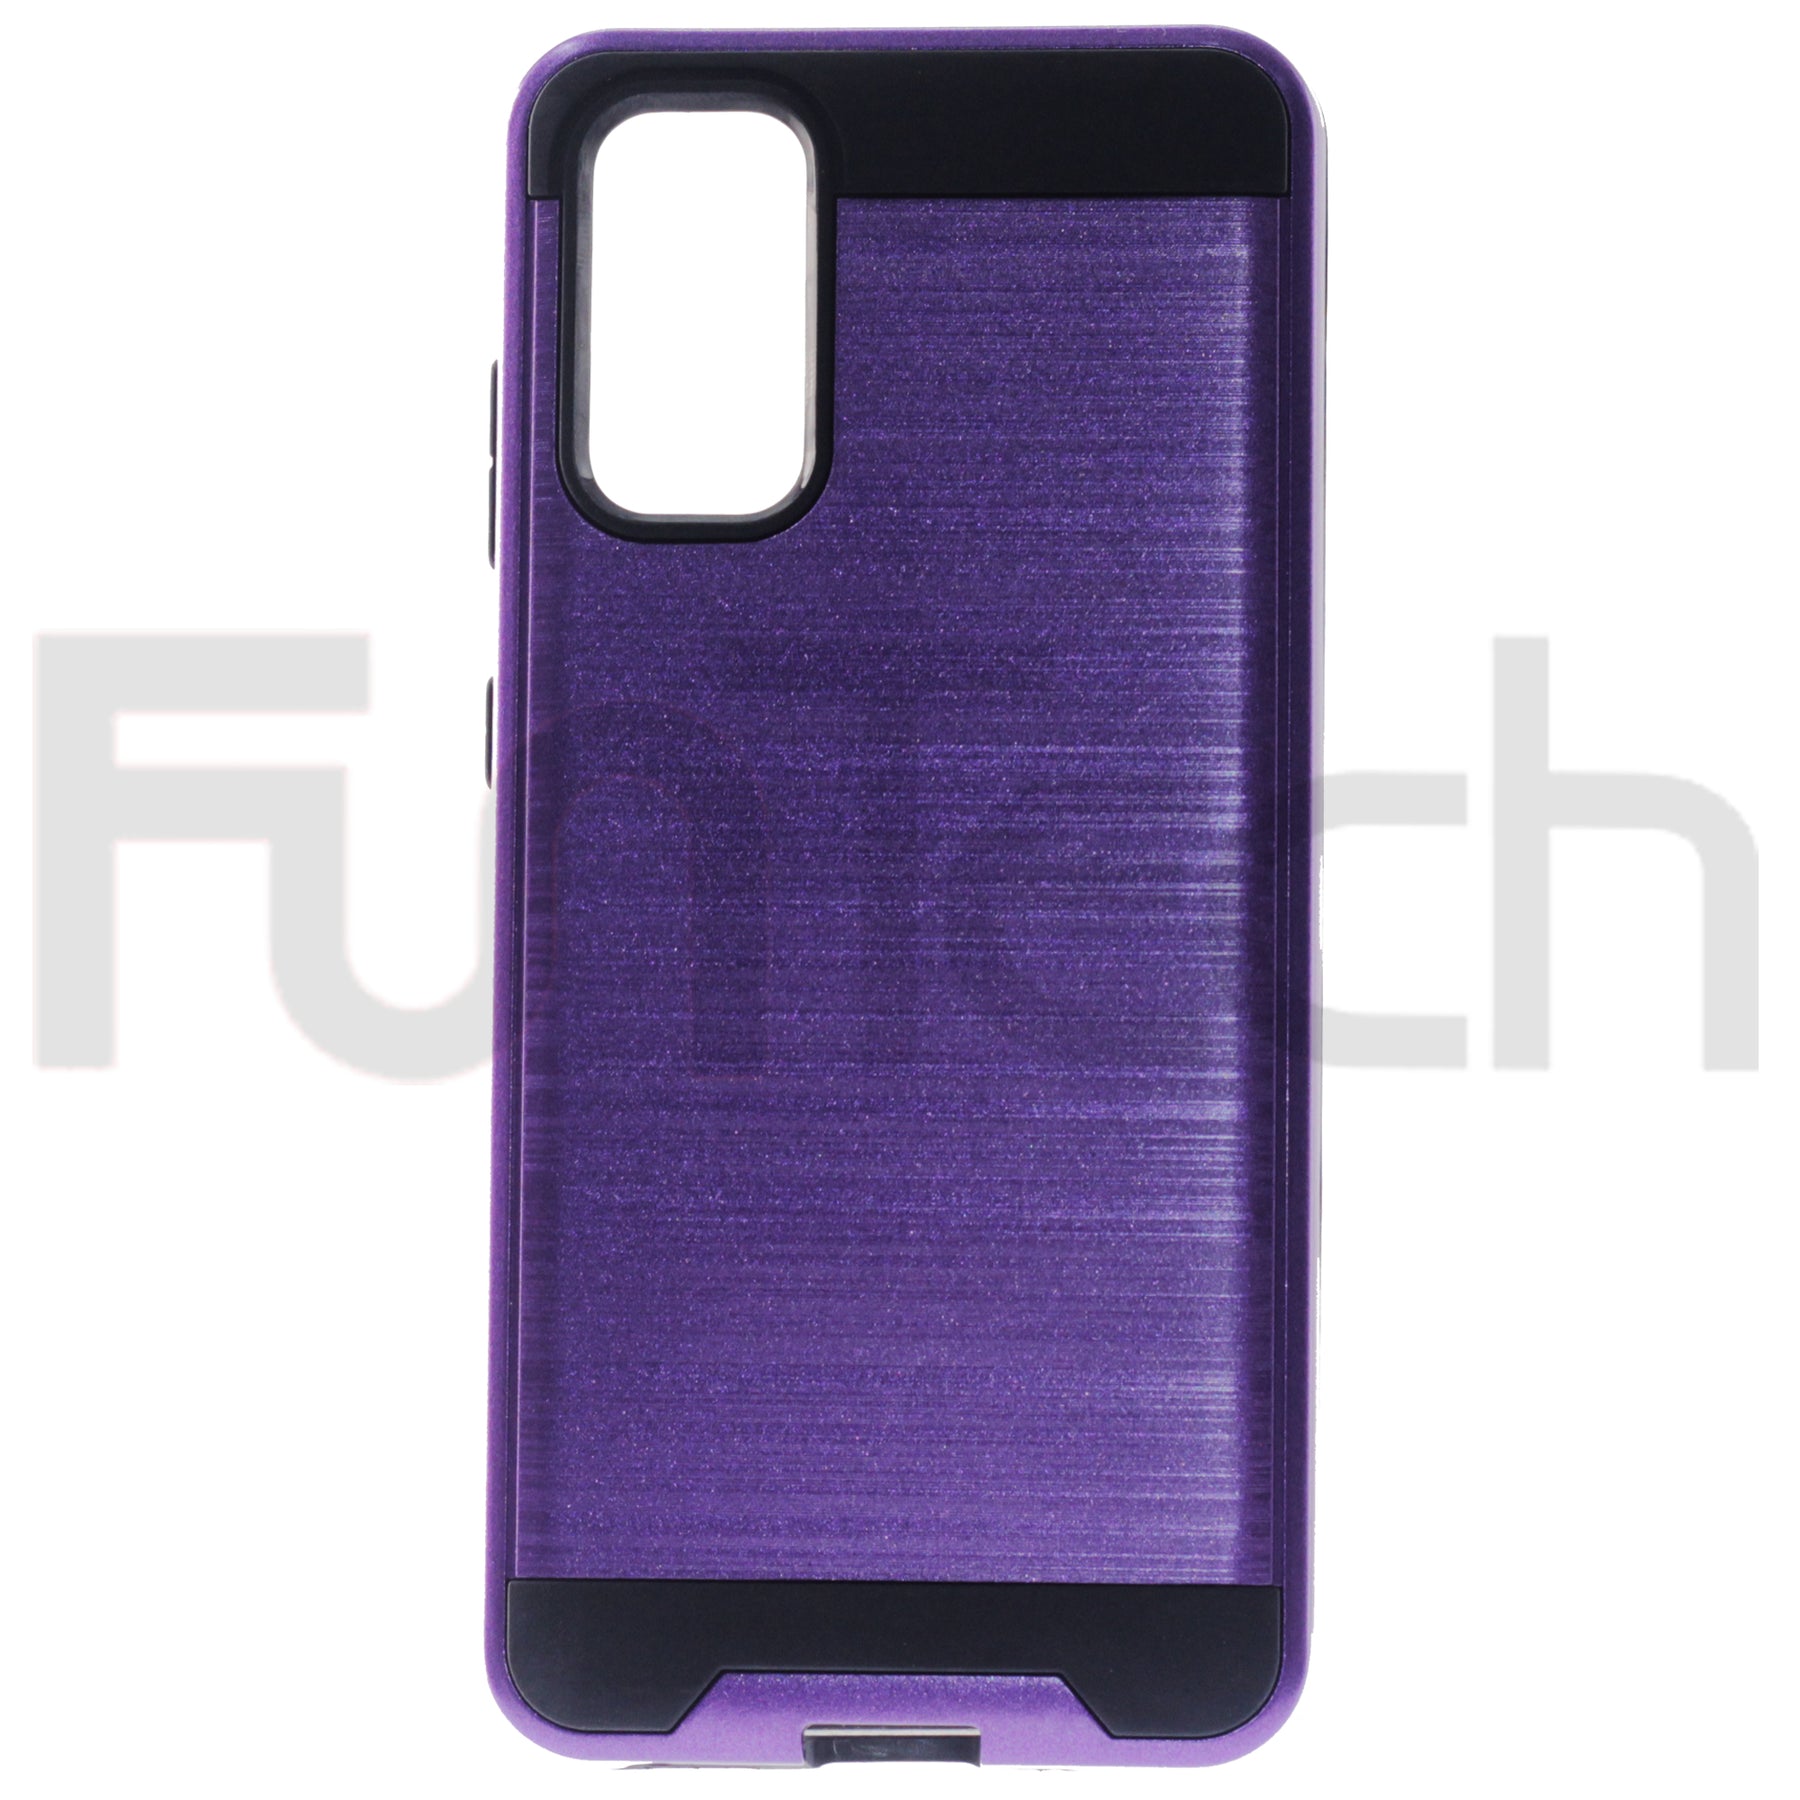 Samsung S20, Slim Armor Case, Color Purple.